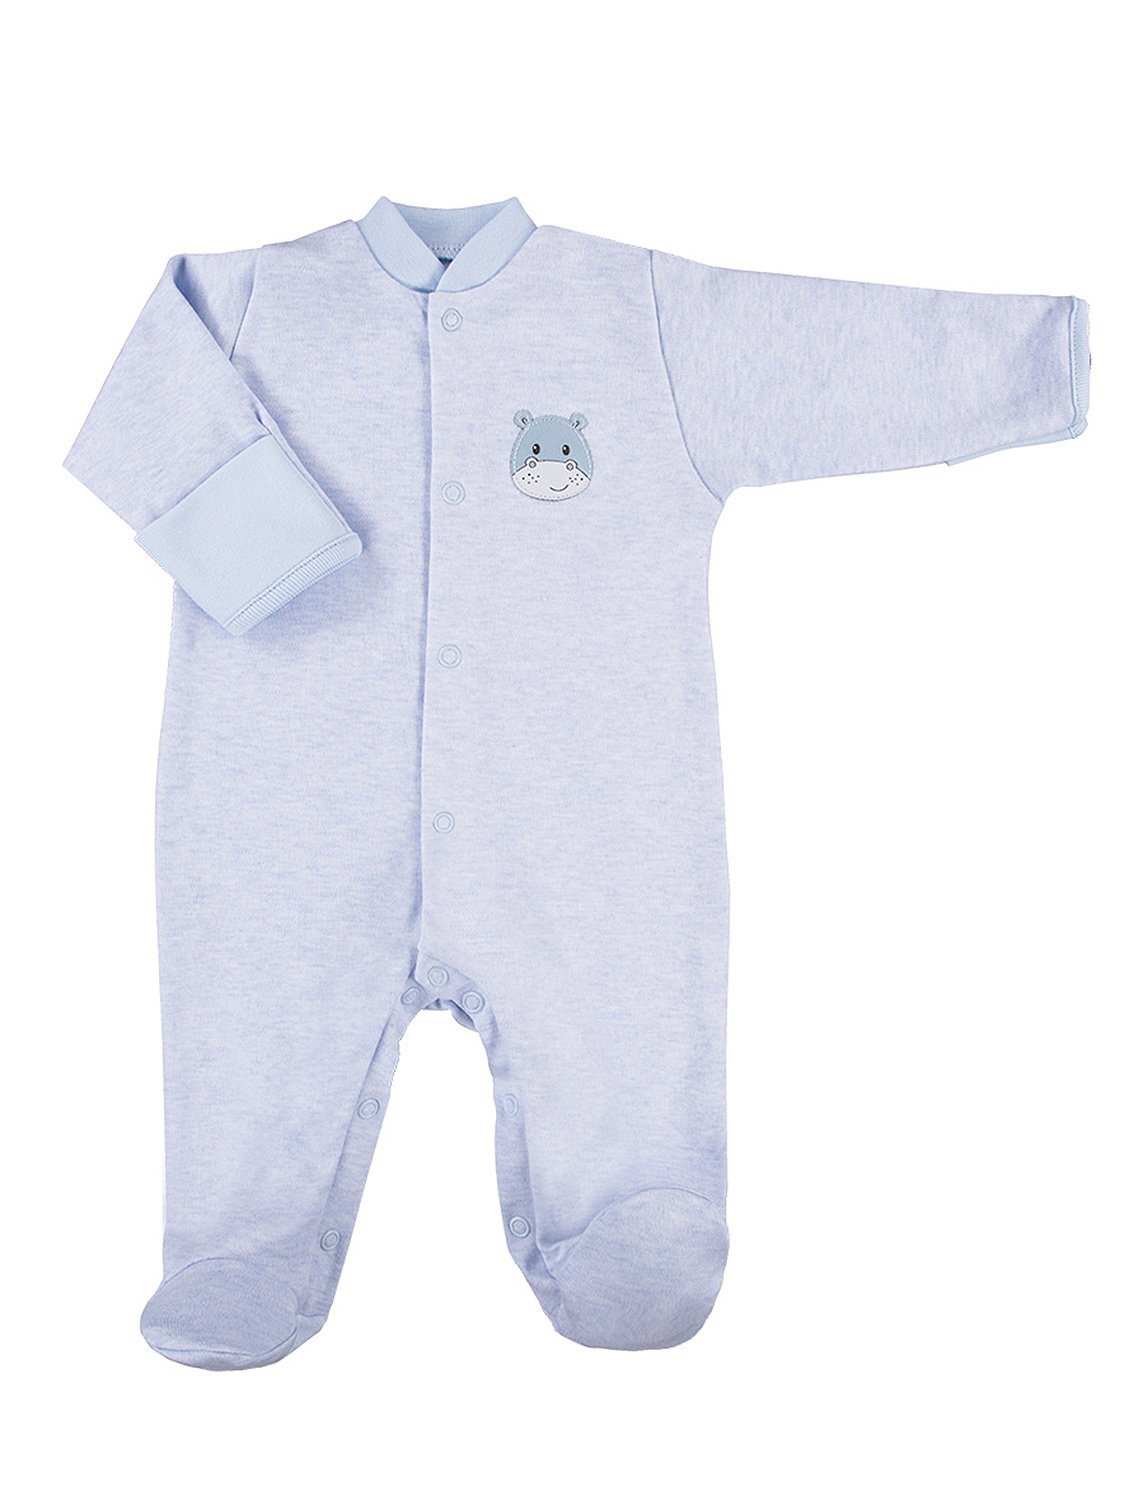 Early Baby Footed Sleepsuit, Cute Hippo Design - Blue - Sleepsuit / Babygrow - EEVI